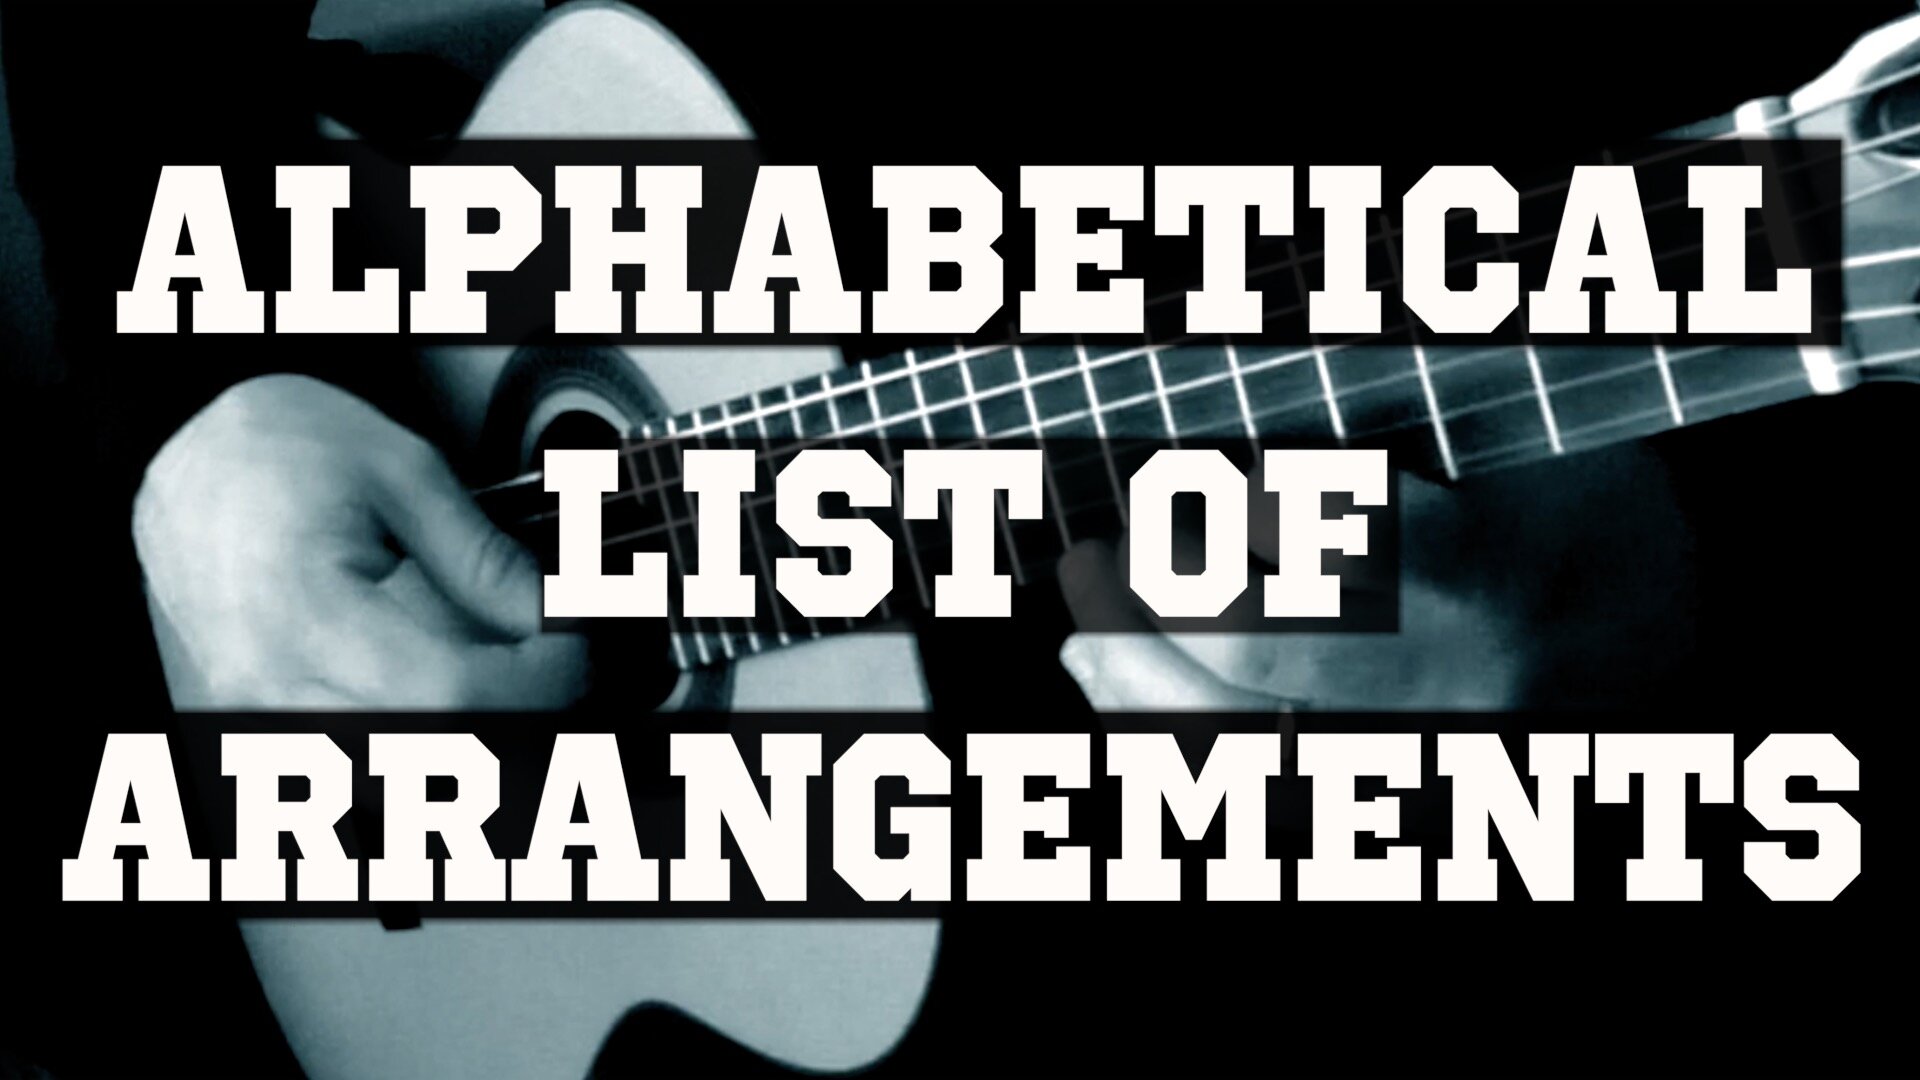 Alphabetical list of arrangements